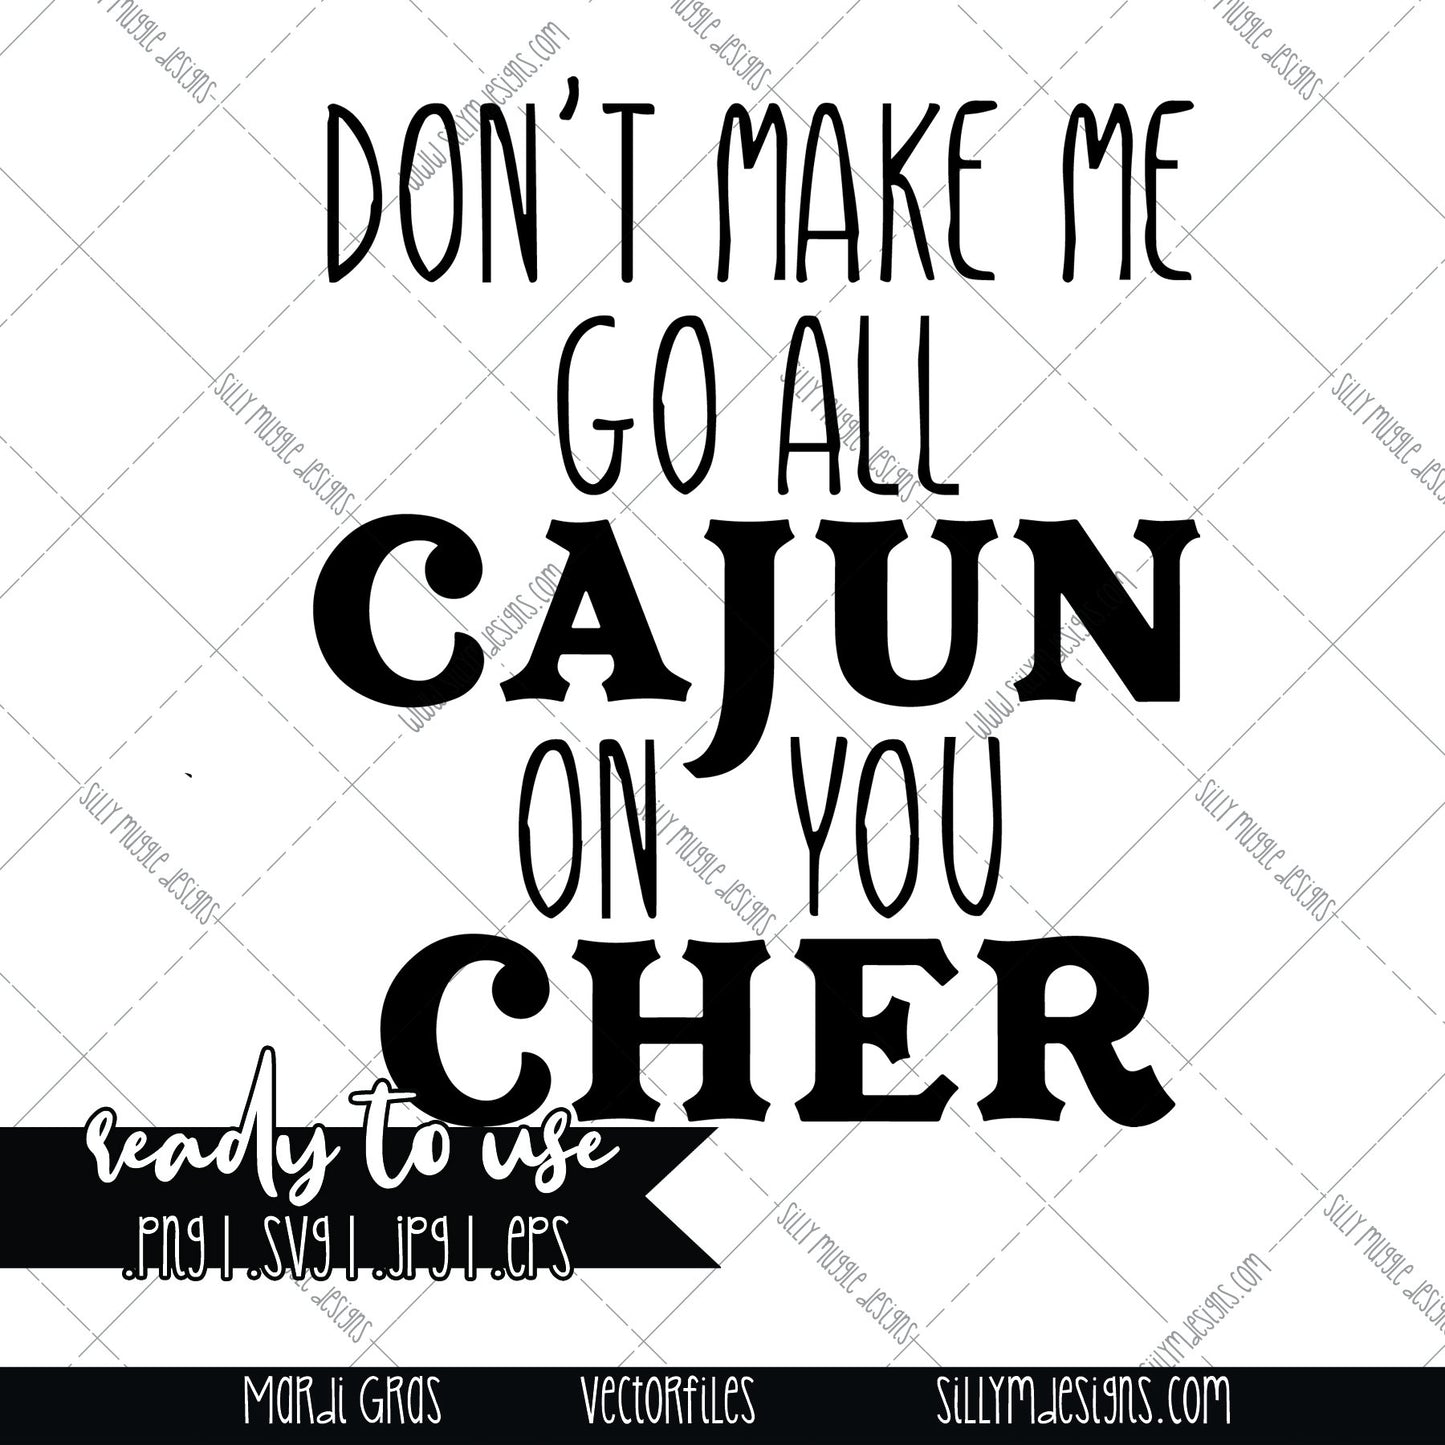 Mardi Gras, Don't Make Me Go Cajun on you Cher | SVG, JPEG, PNG